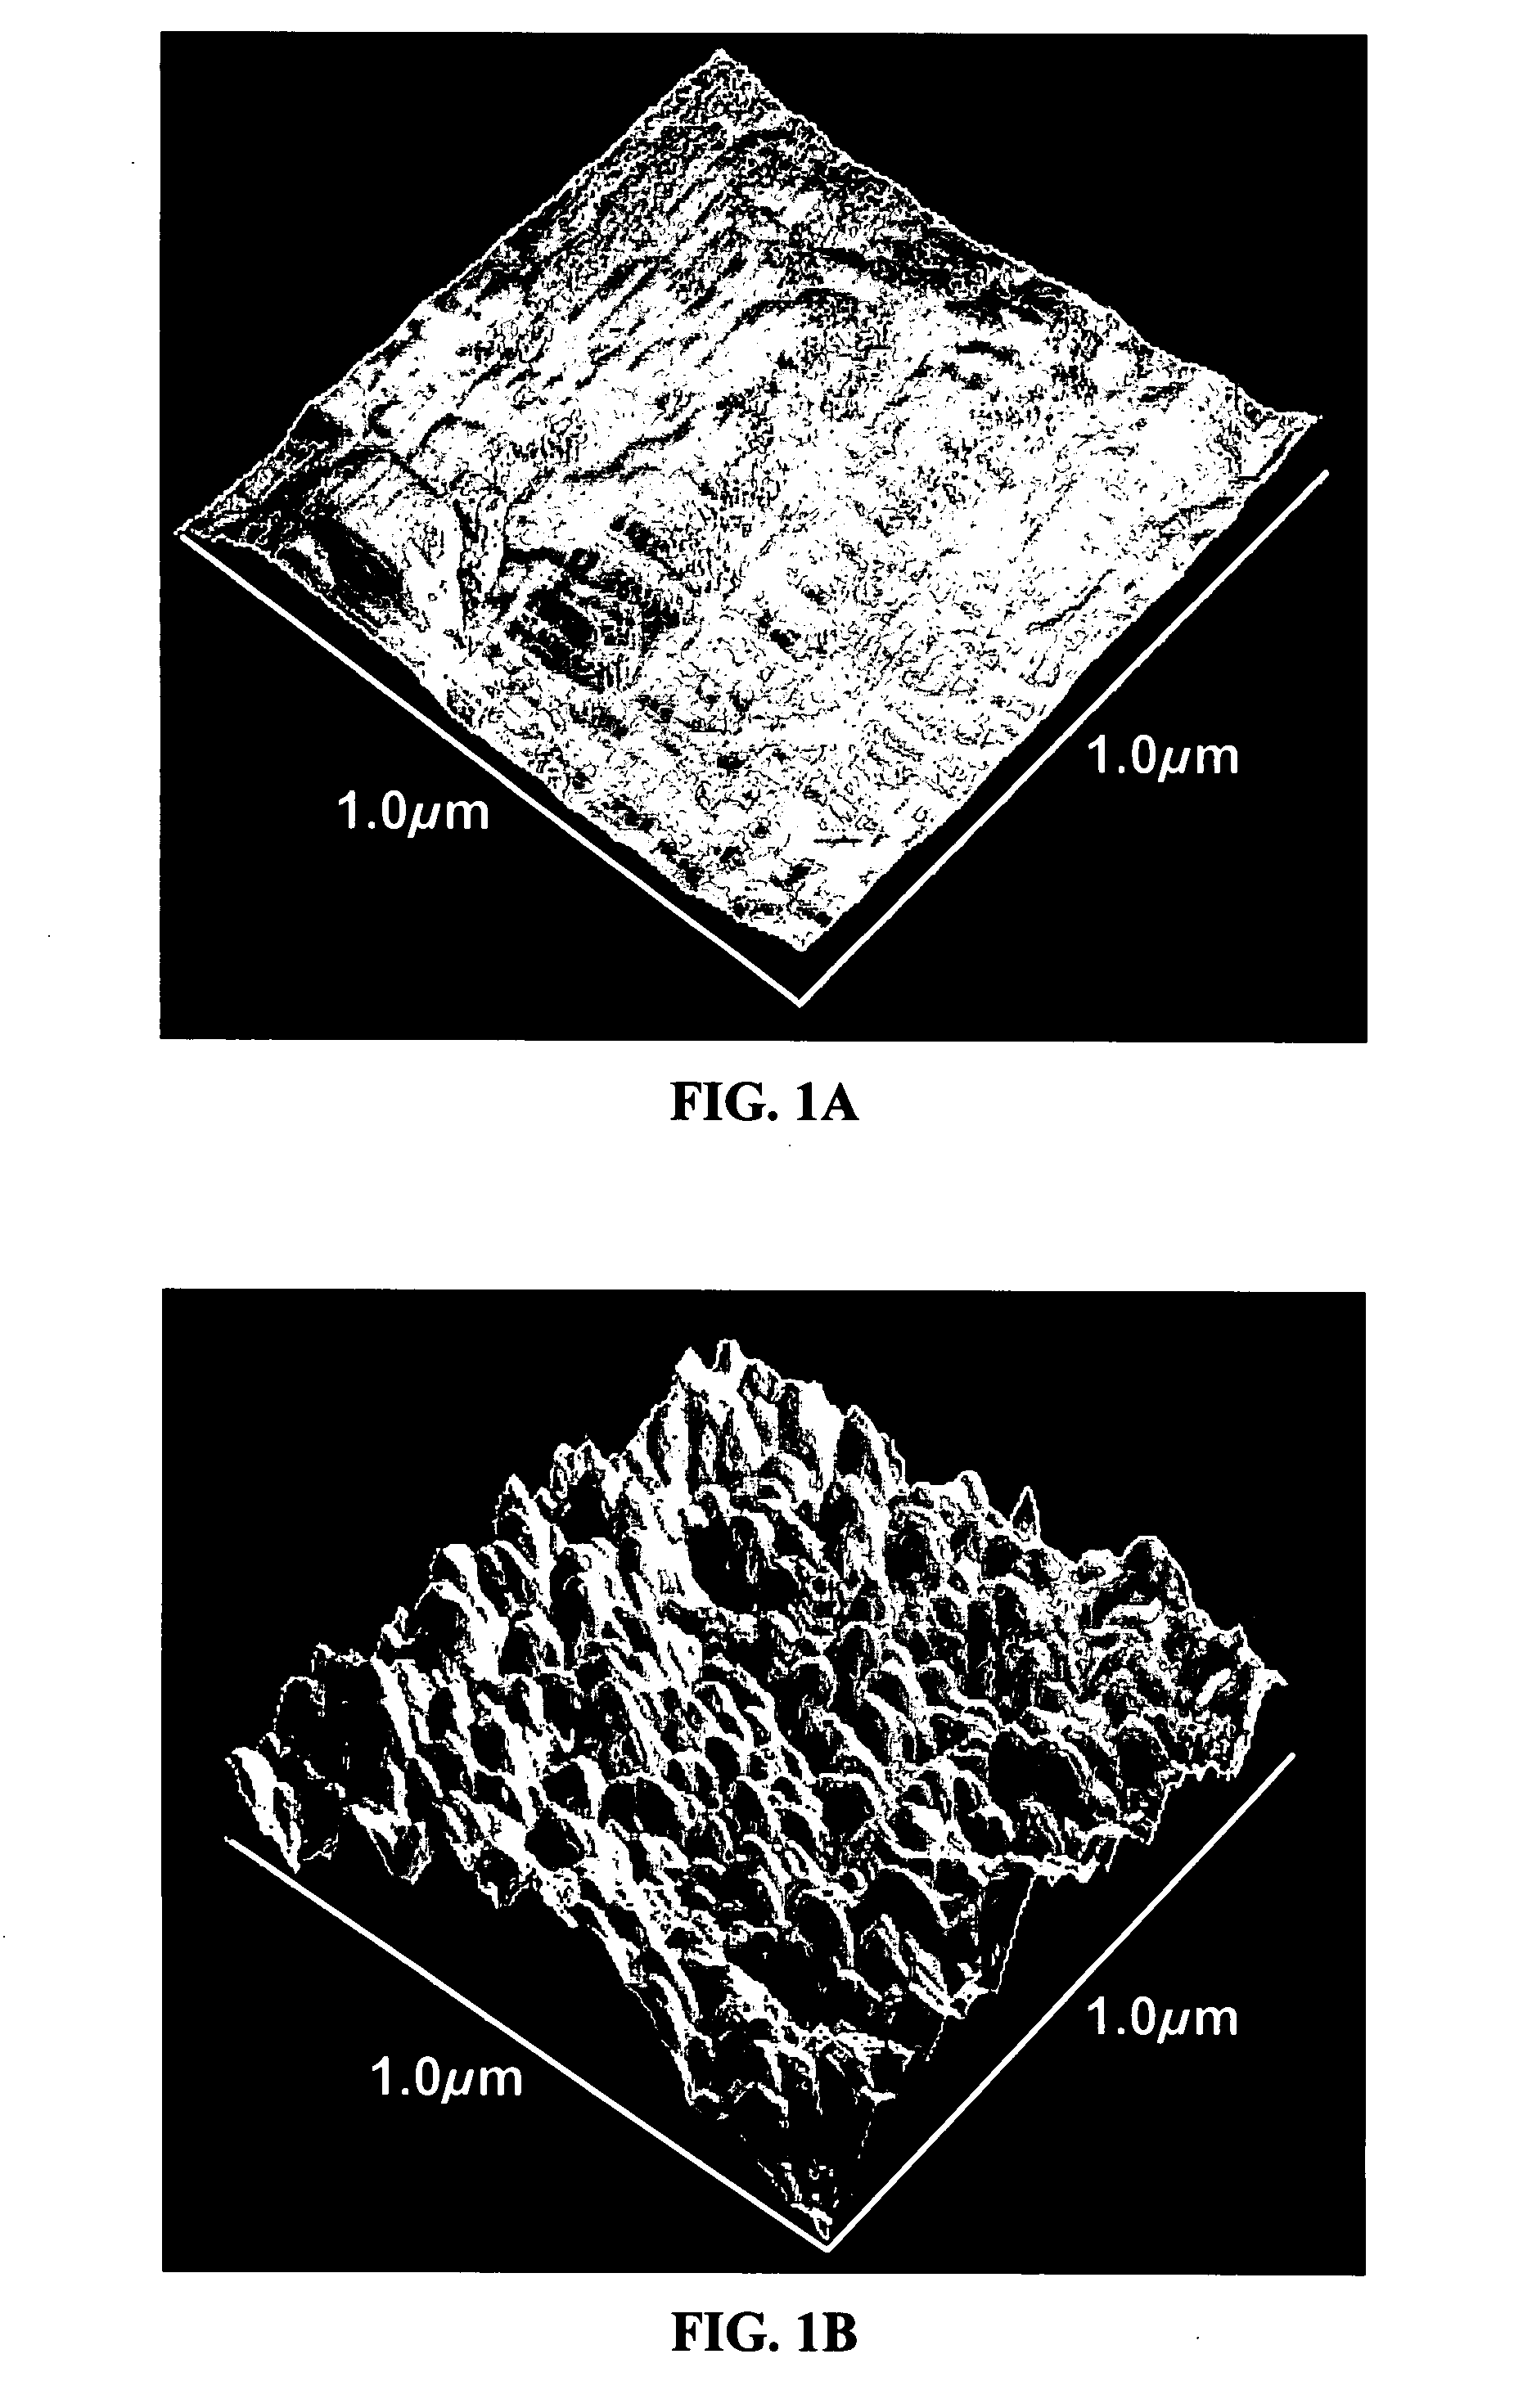 Hydroxyapatite coated nanostructured titanium surfaces